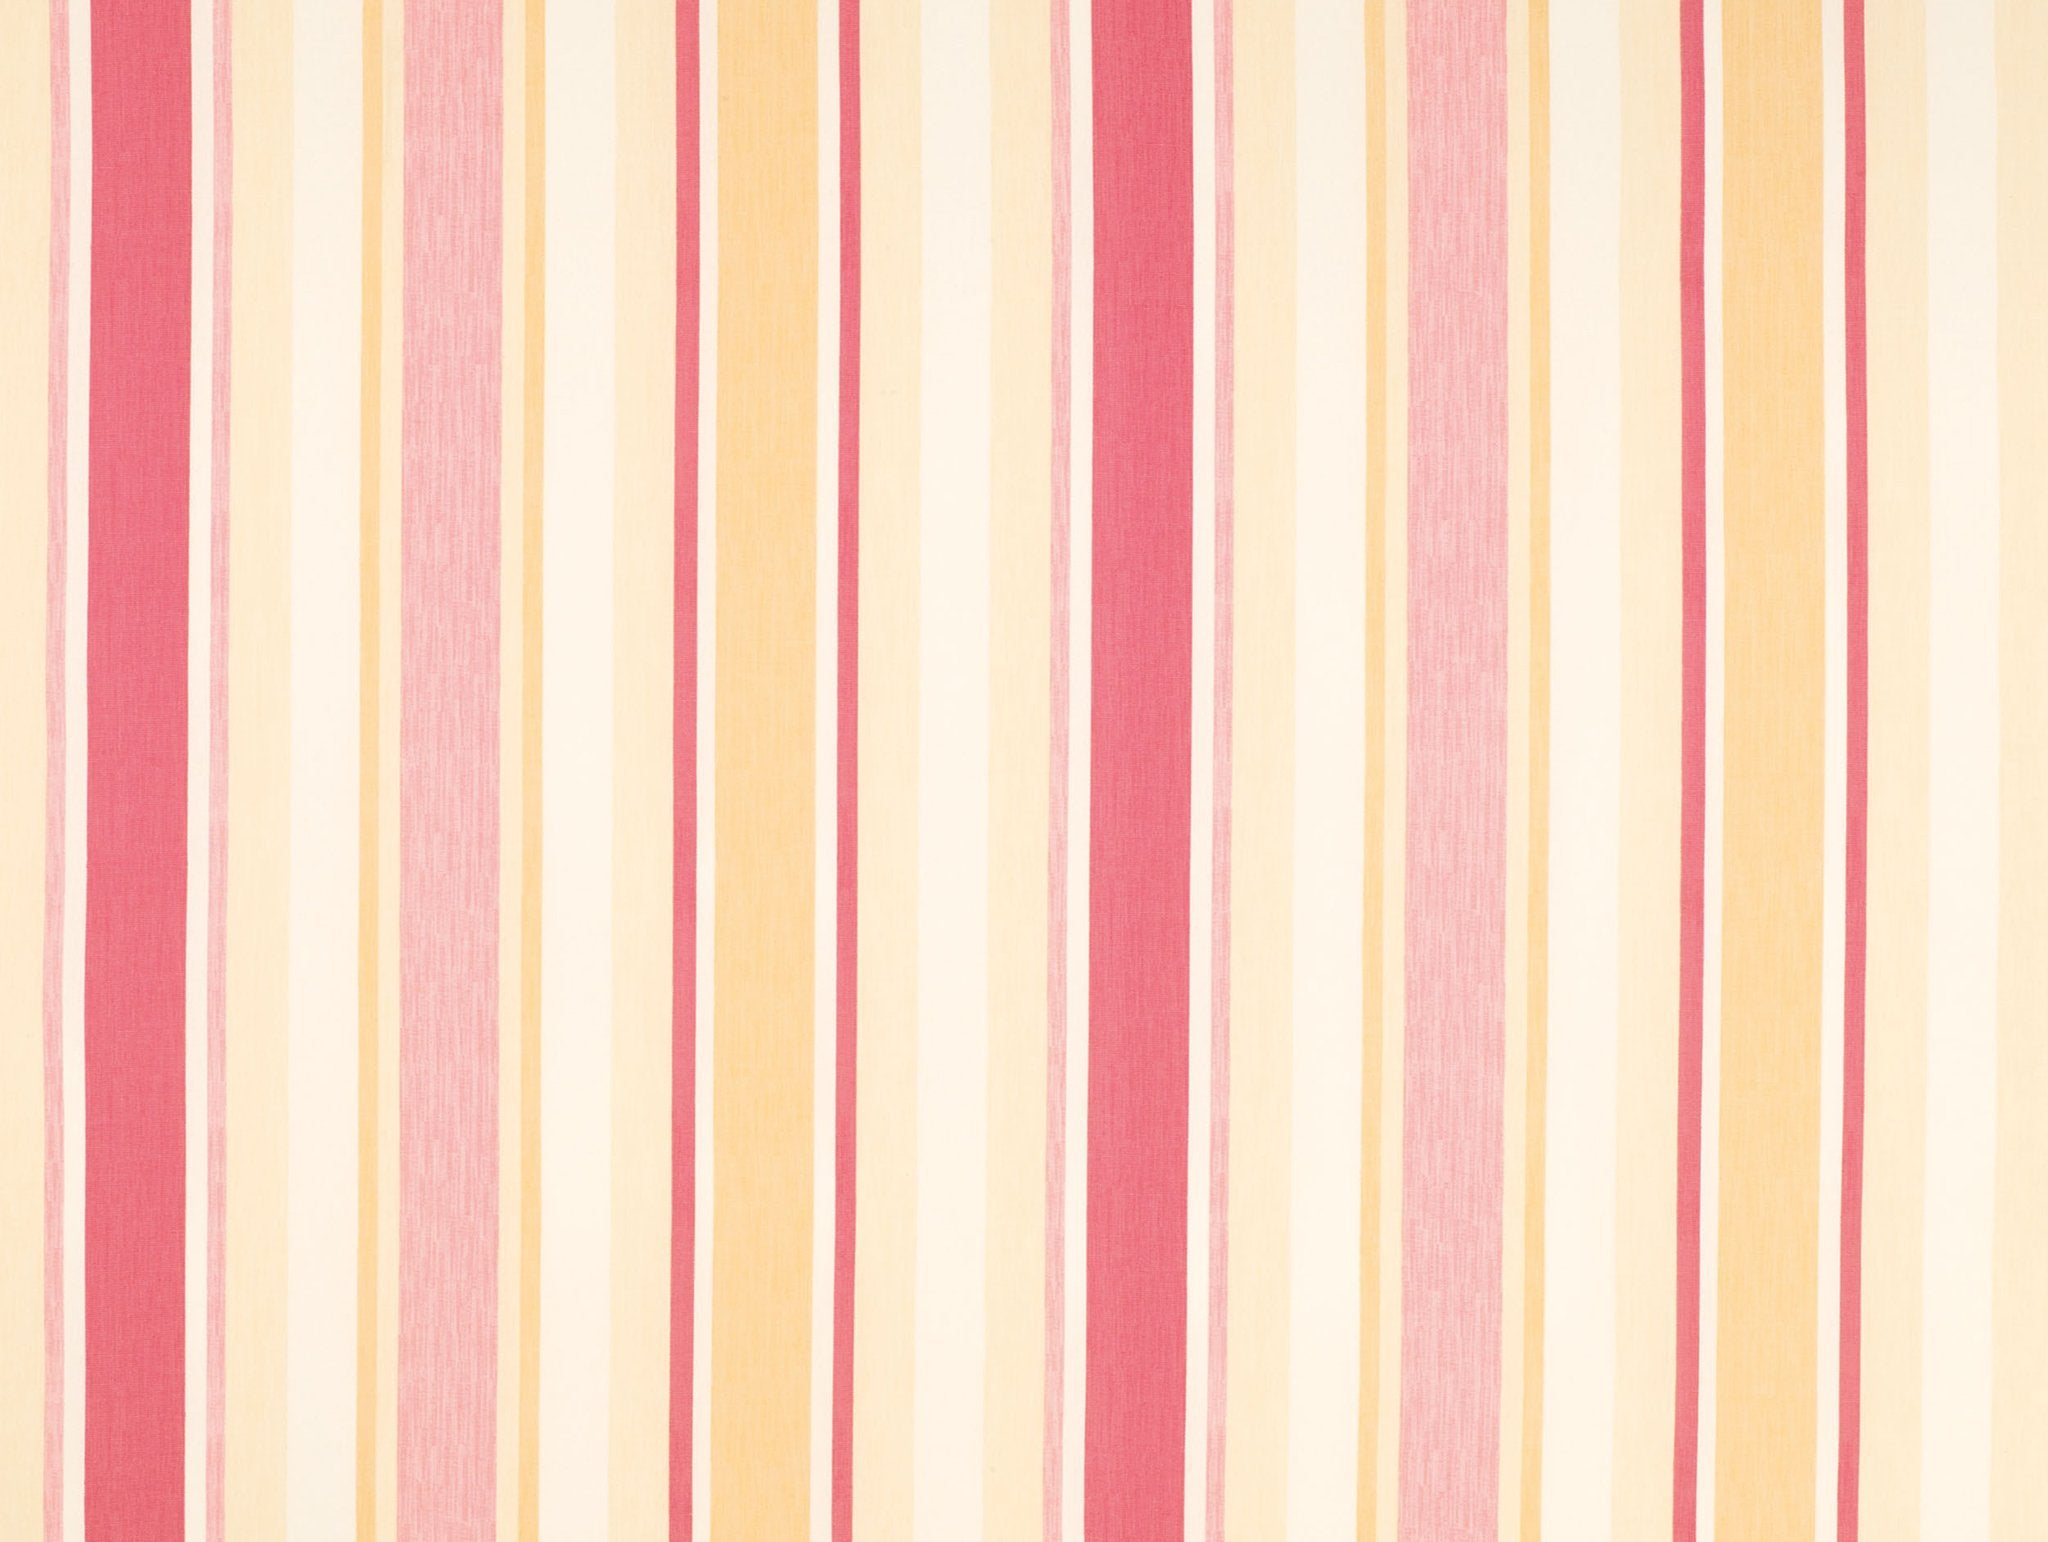 Laura Ashley ΥΦΑΣΜΑ Awning Pink Grapefruit ΜΕ ΤΟ ΜΕΤΡΟ ΦΑΡΔΟΥΣ 137ΕΚ 11659259148